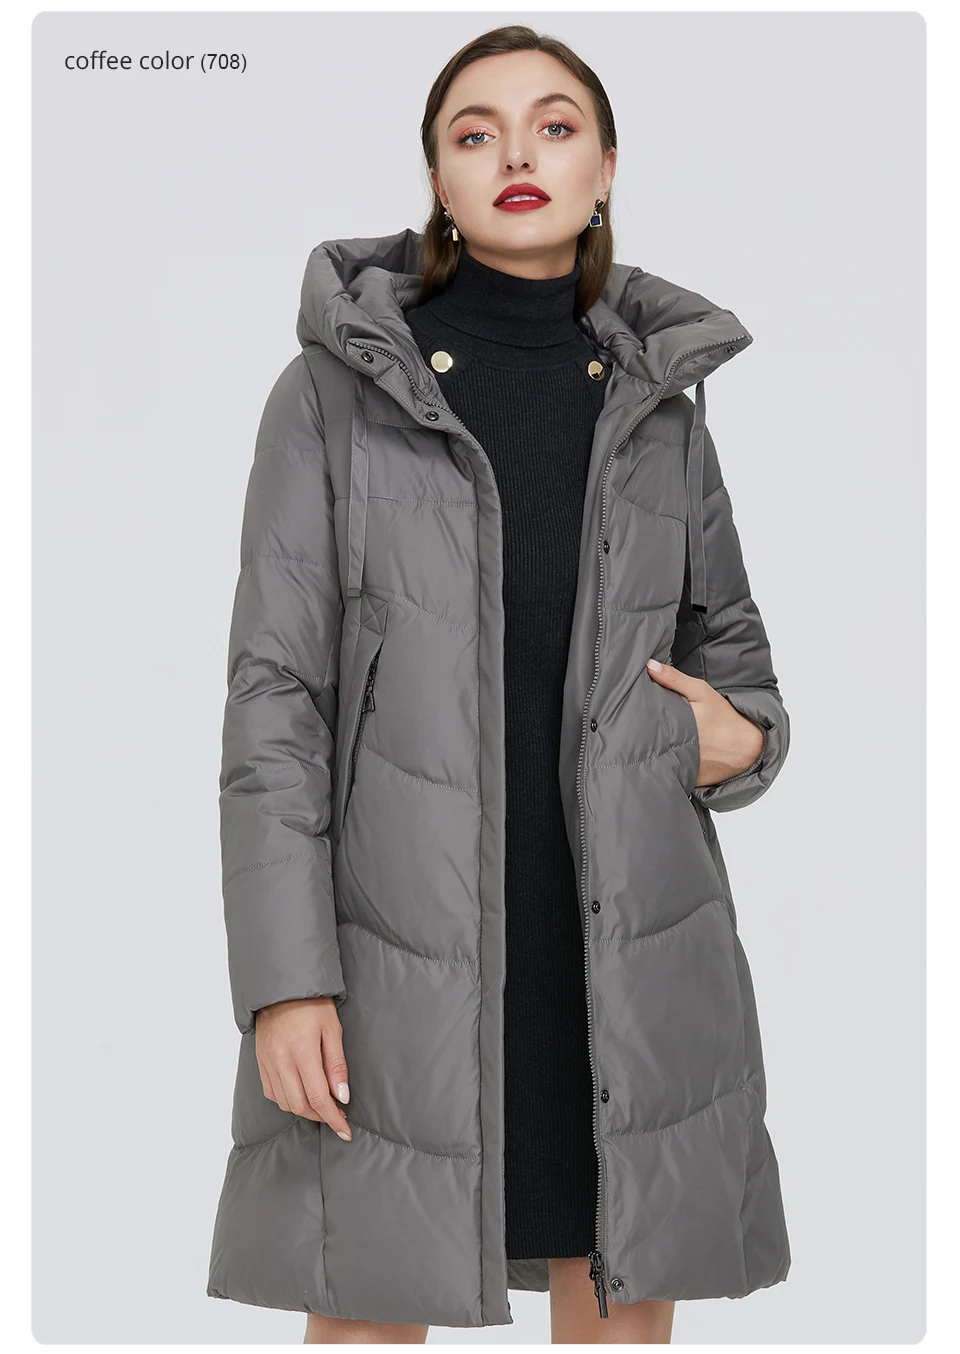 jaqueta feminina manga longa grosso parka casaco